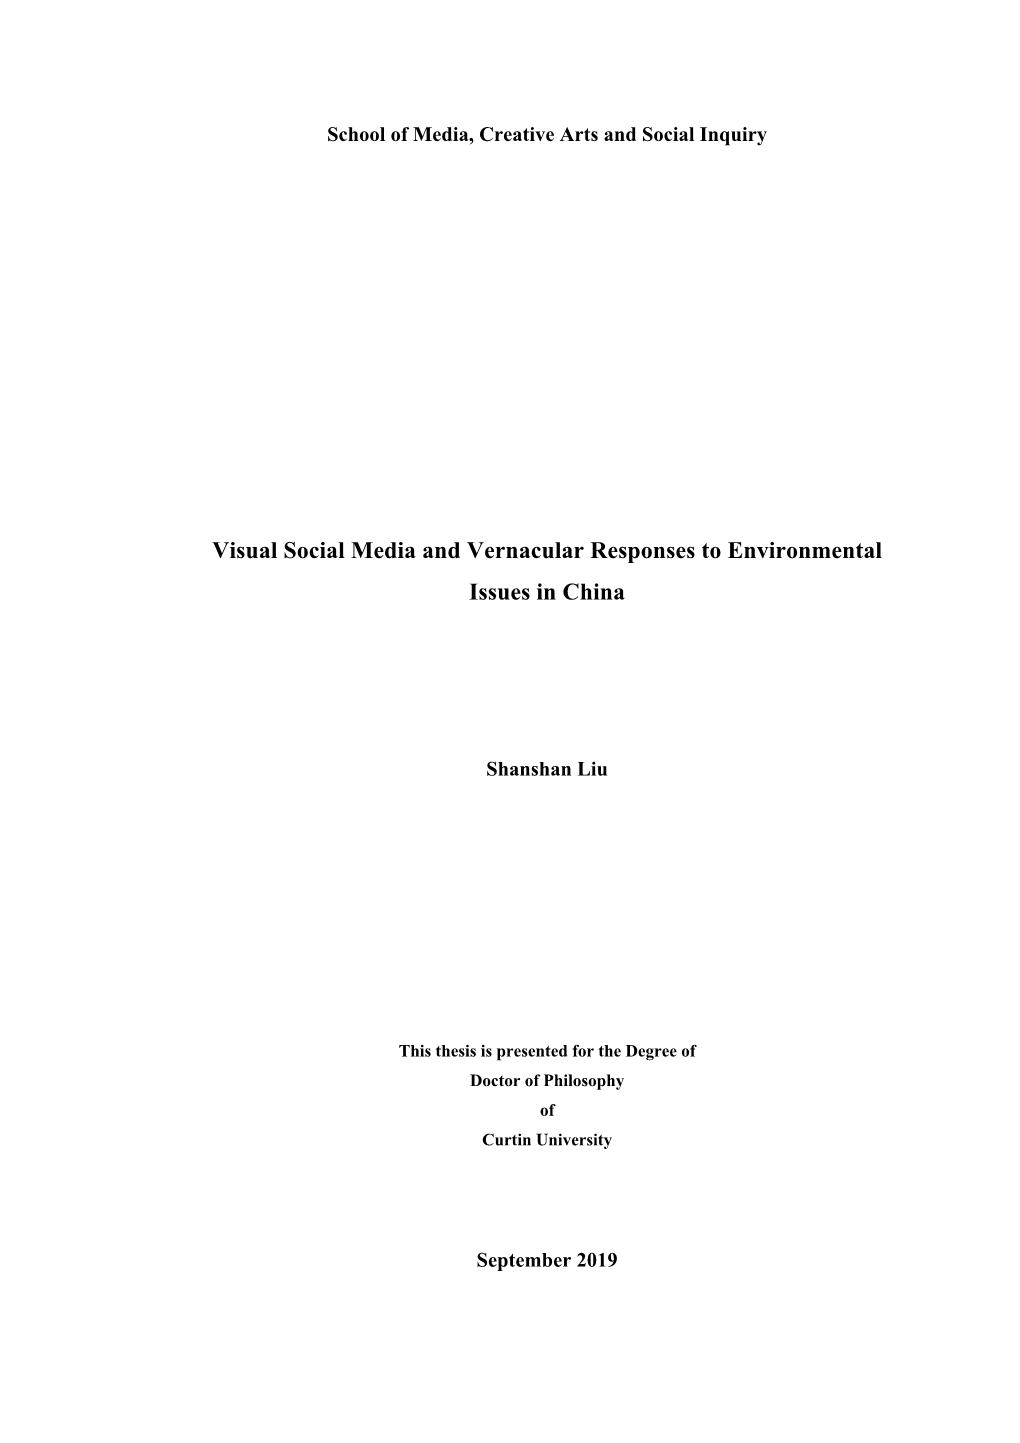 Visual Social Media and Vernacular Responses to Environmental Issues in China